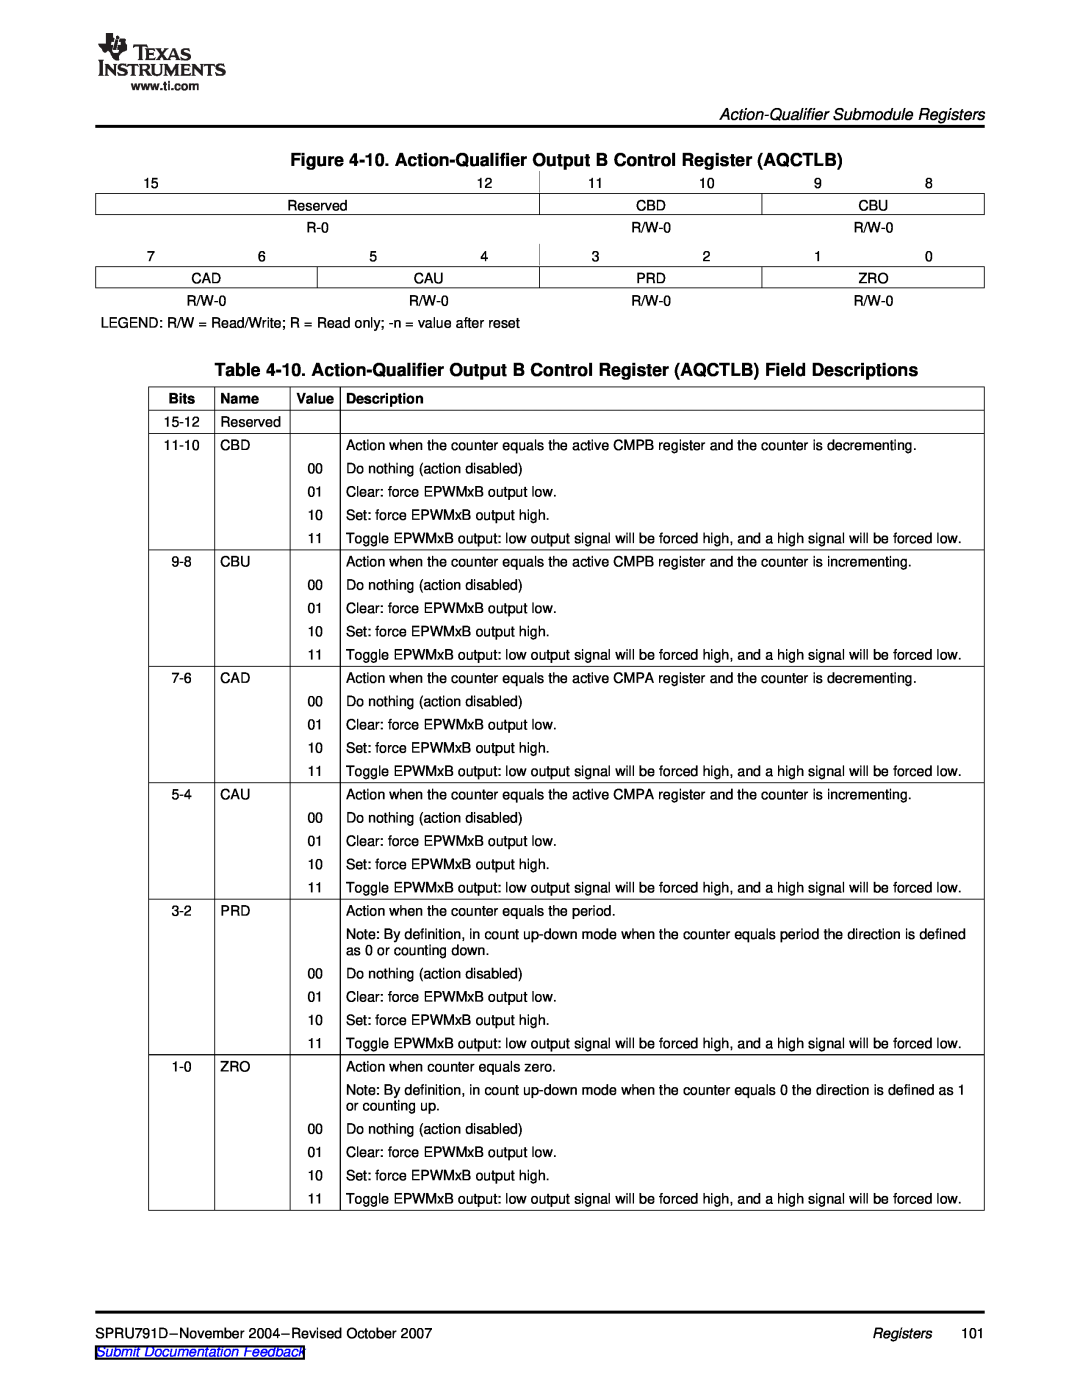 Texas Instruments 28xxx manual 10. Action-Qualifier Output B Control Register AQCTLB, Action-Qualifier Submodule Registers 